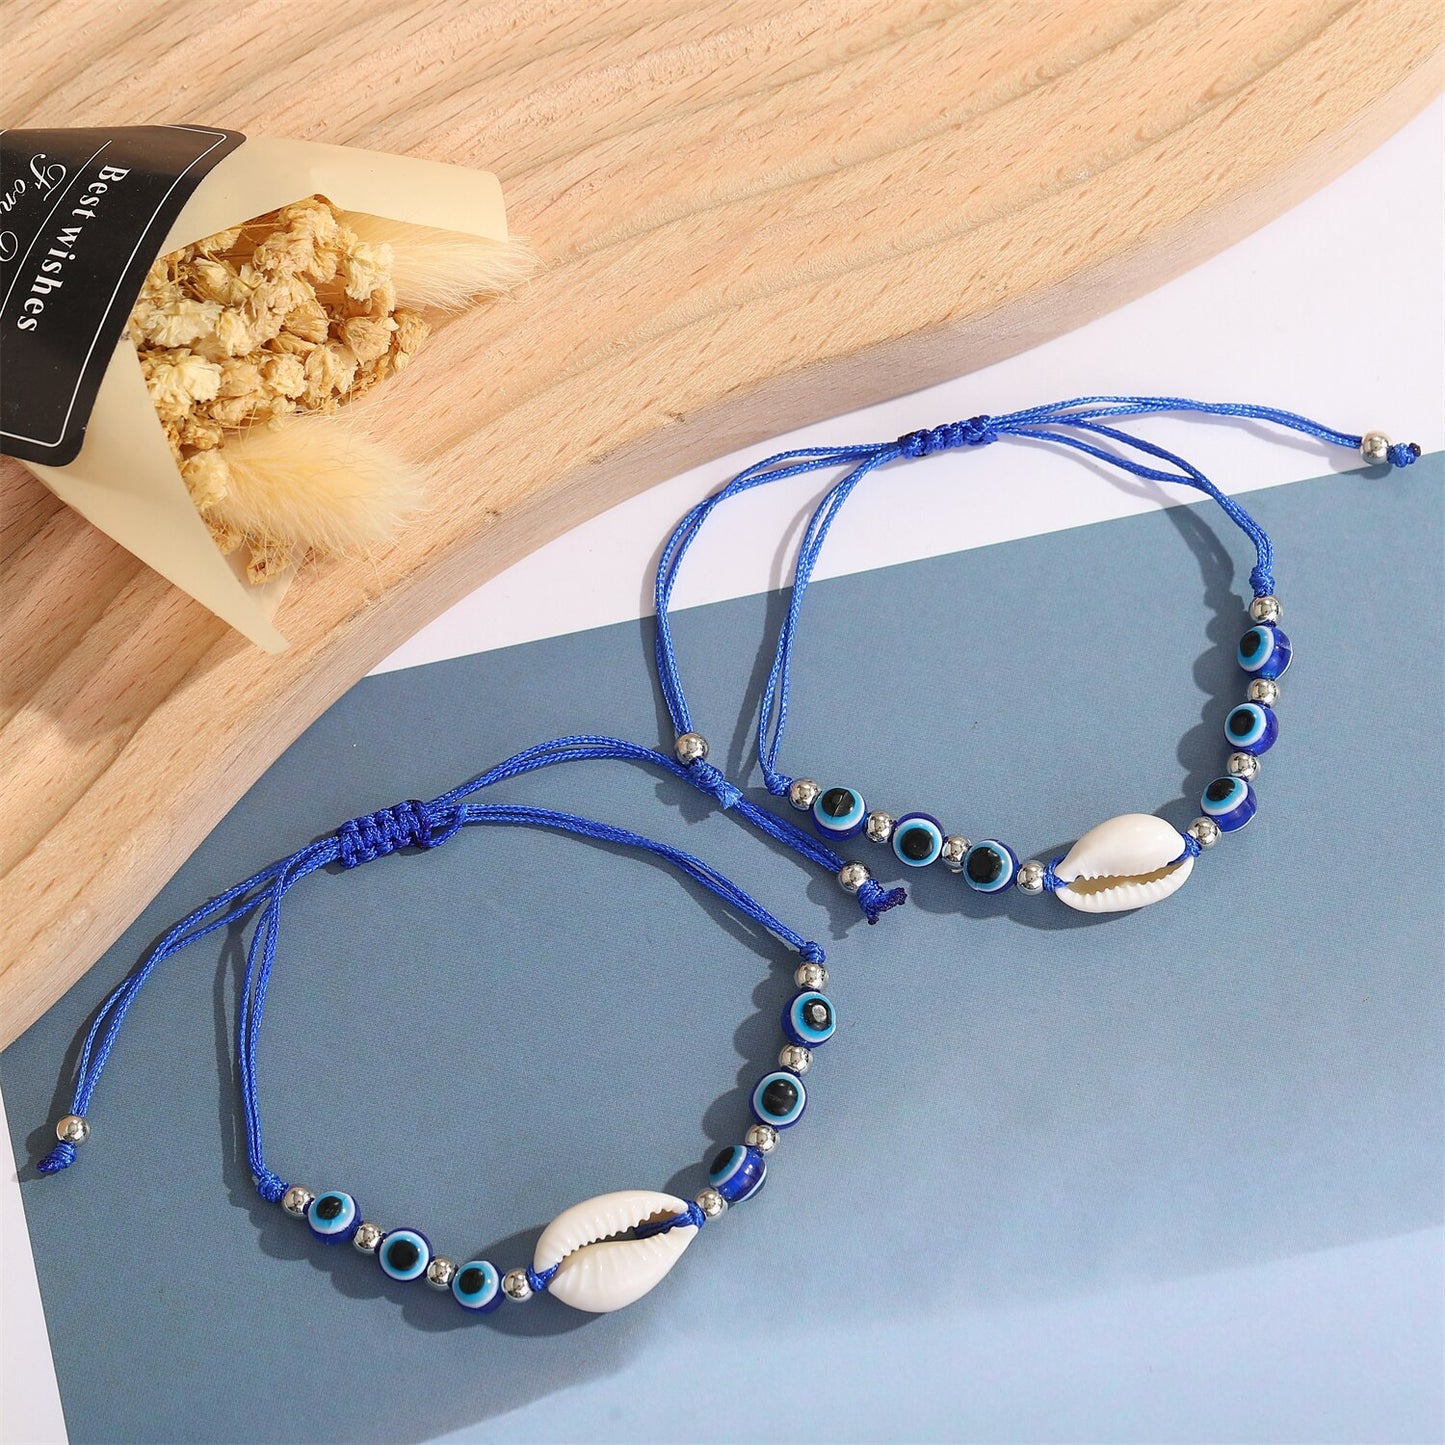 12pc/set Blue Evil Eye Beads Shell Charms Bracelets Men Women Adjustable Ocean Beach Vacation Jewelry Handmade Braided Anklet